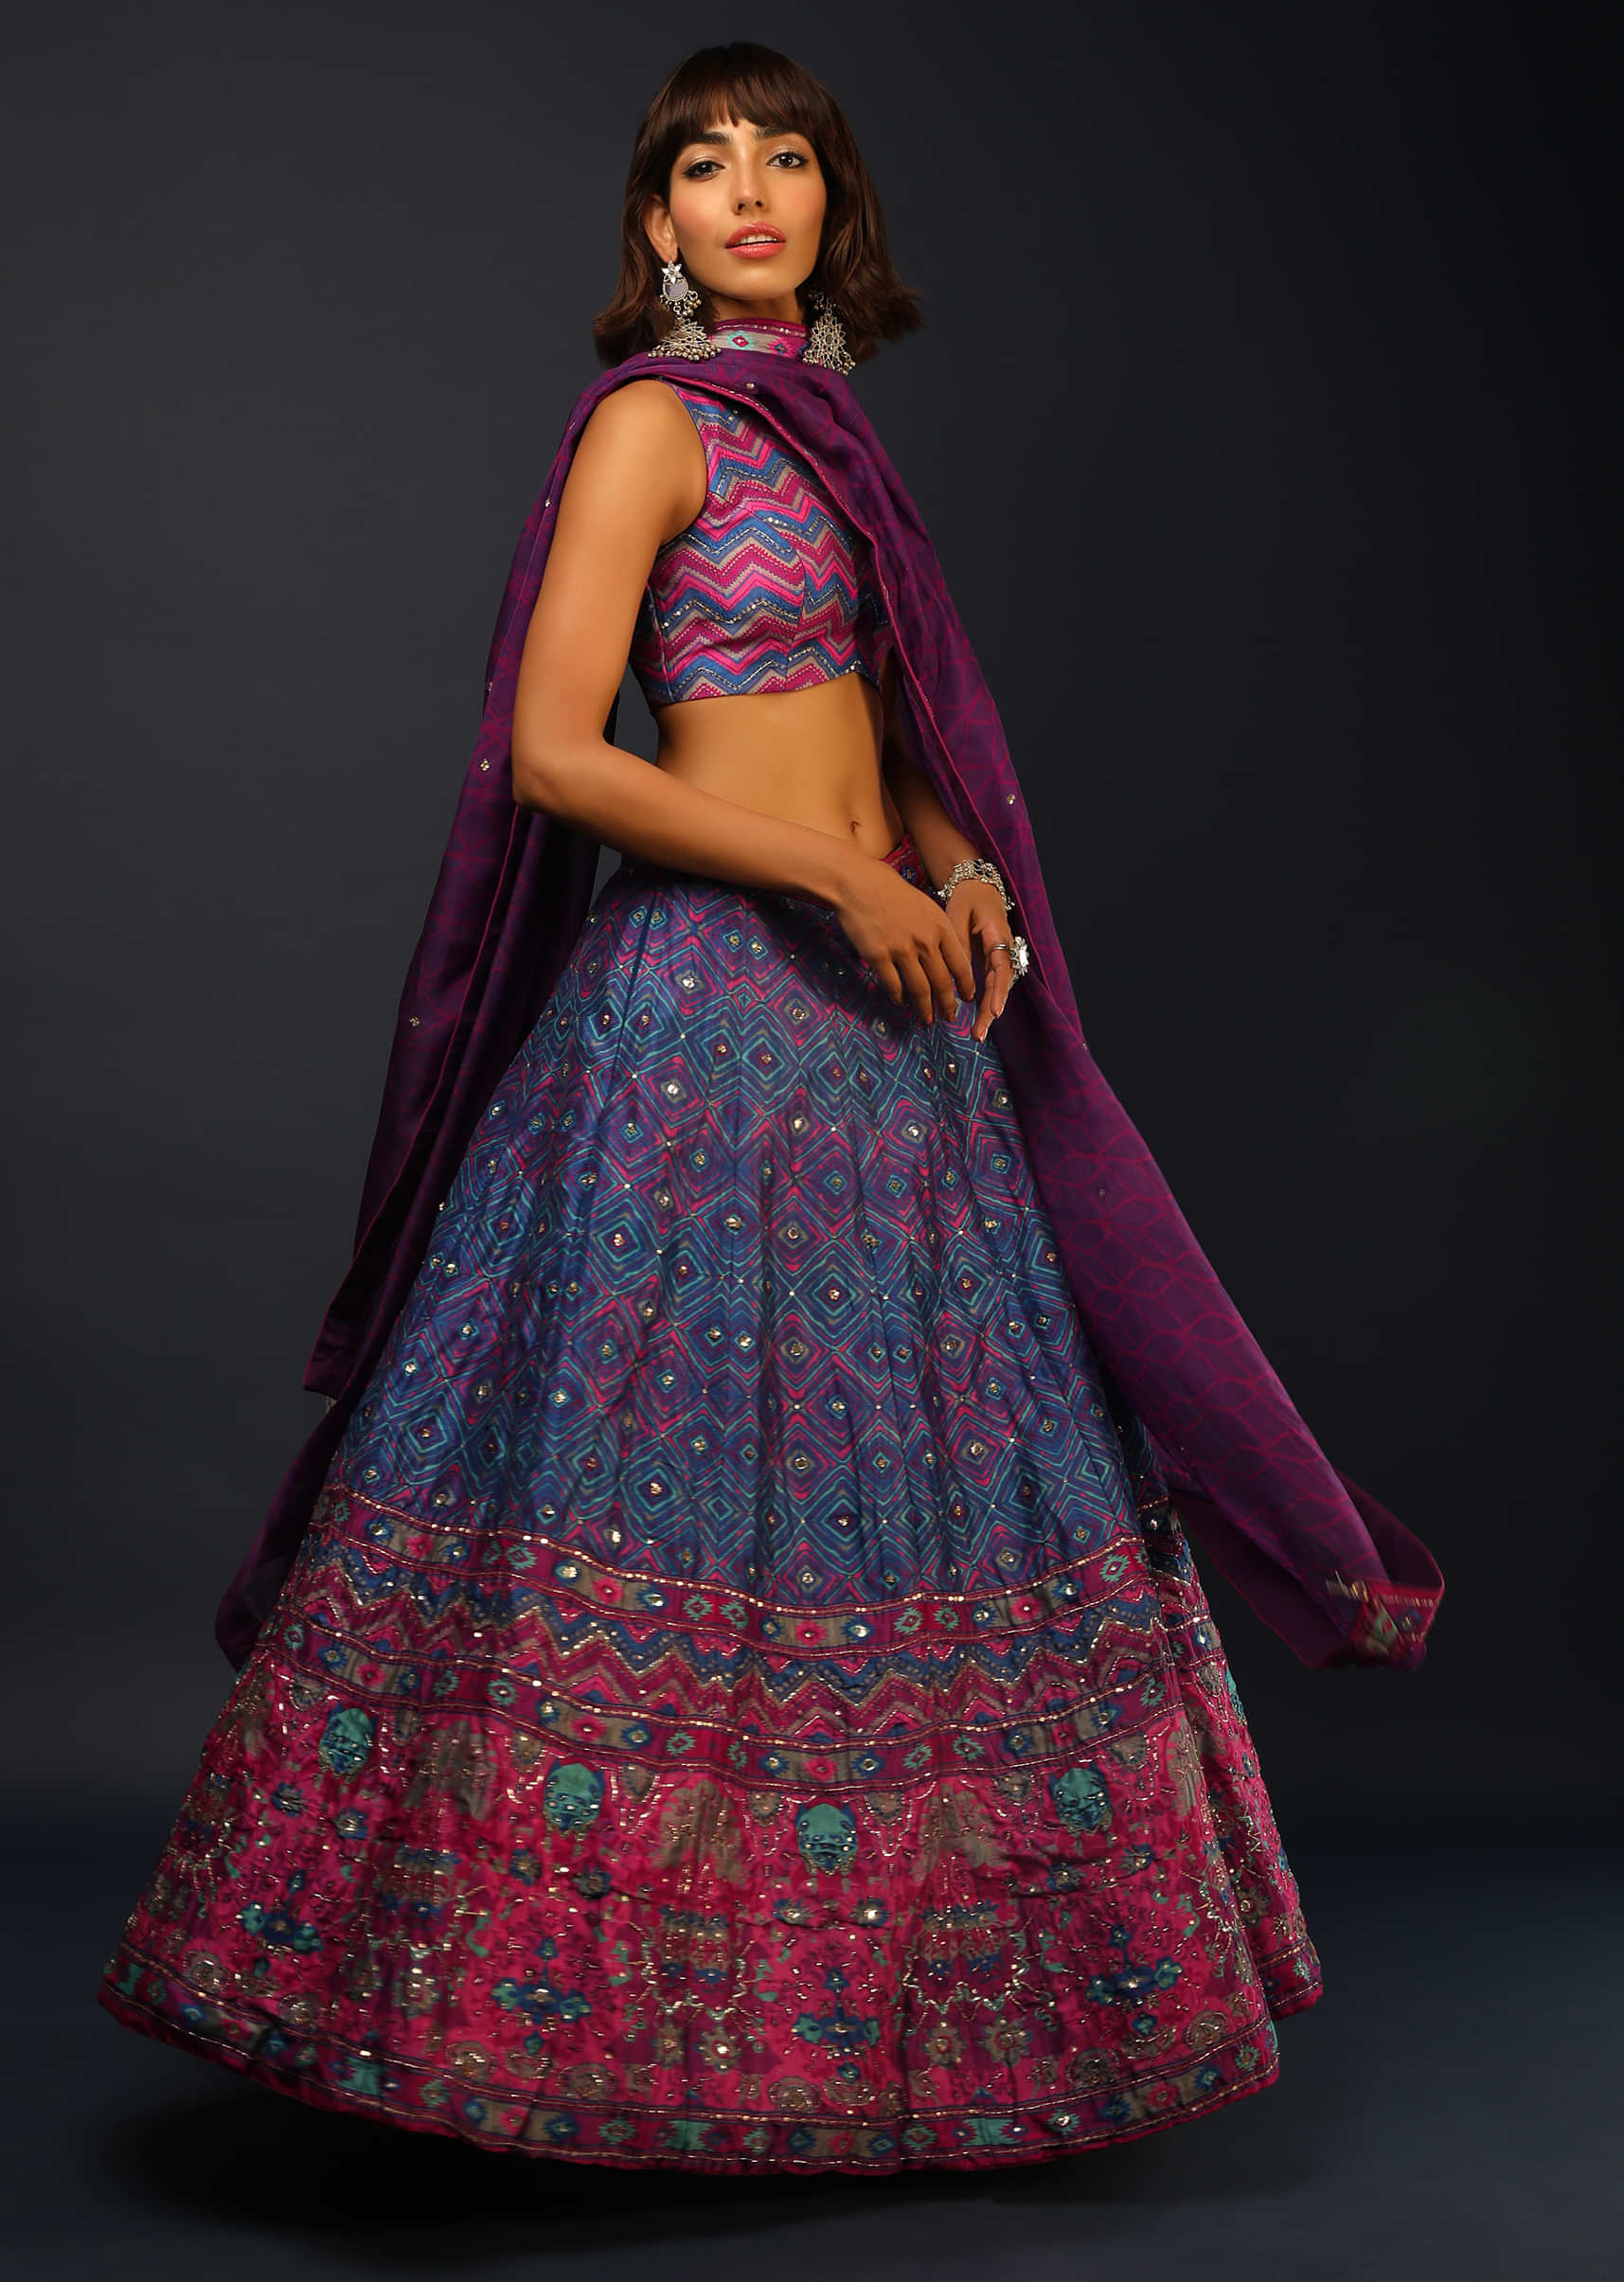 Victoria Blue Lehenga Choli In Silk With Tie Dye Print And Pink Patola Border 